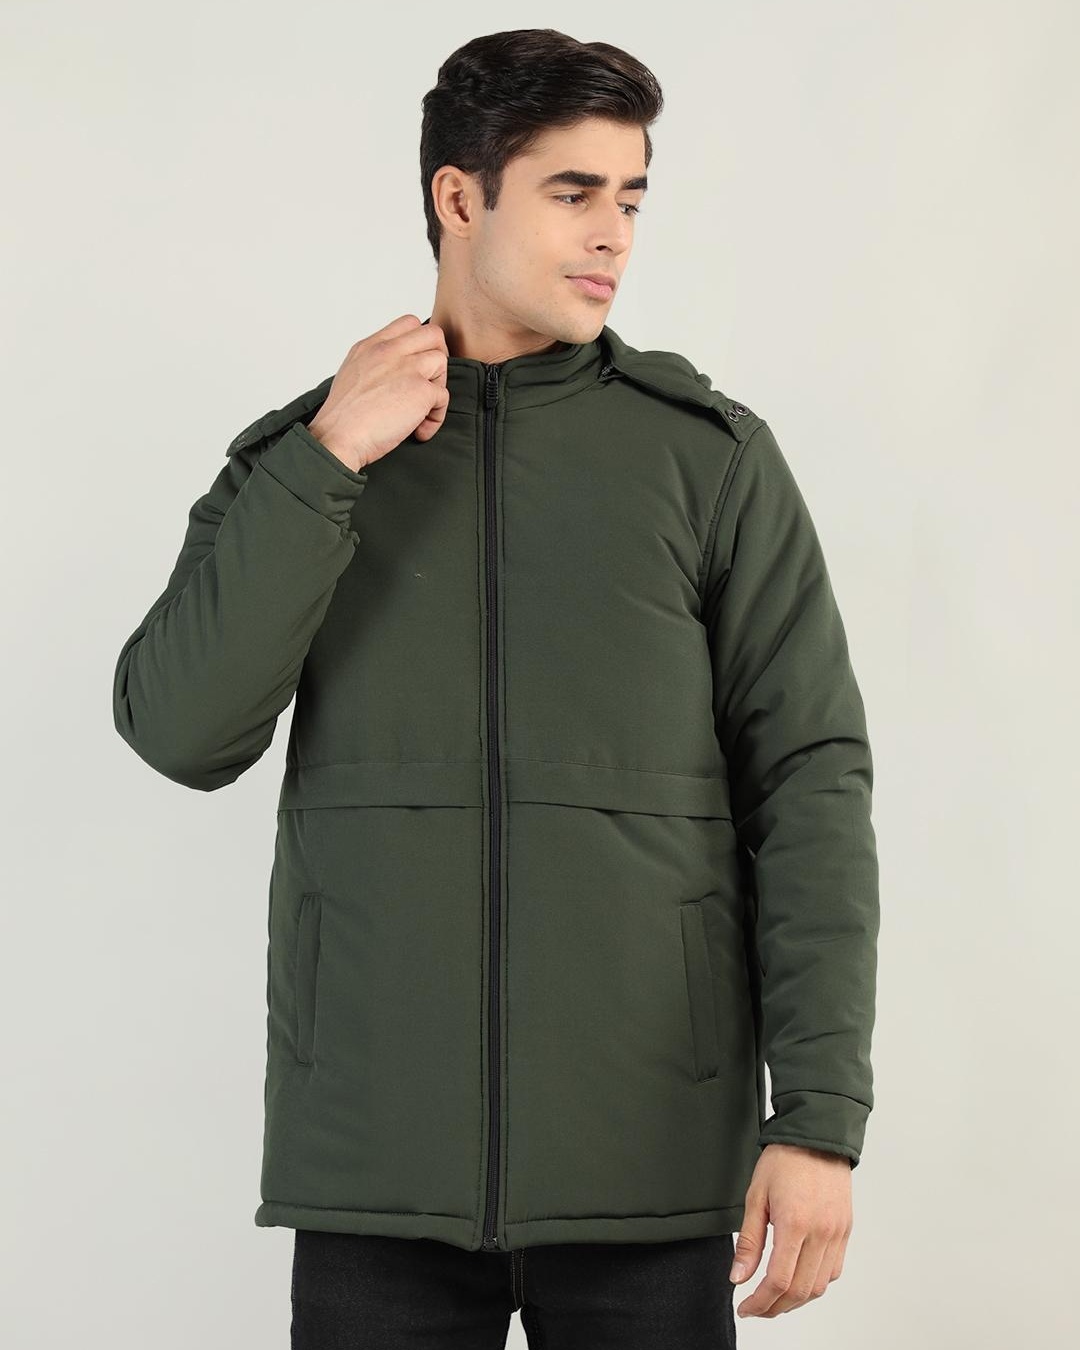 Buy Men's Green Hooded Puffer Jacket Online at Bewakoof